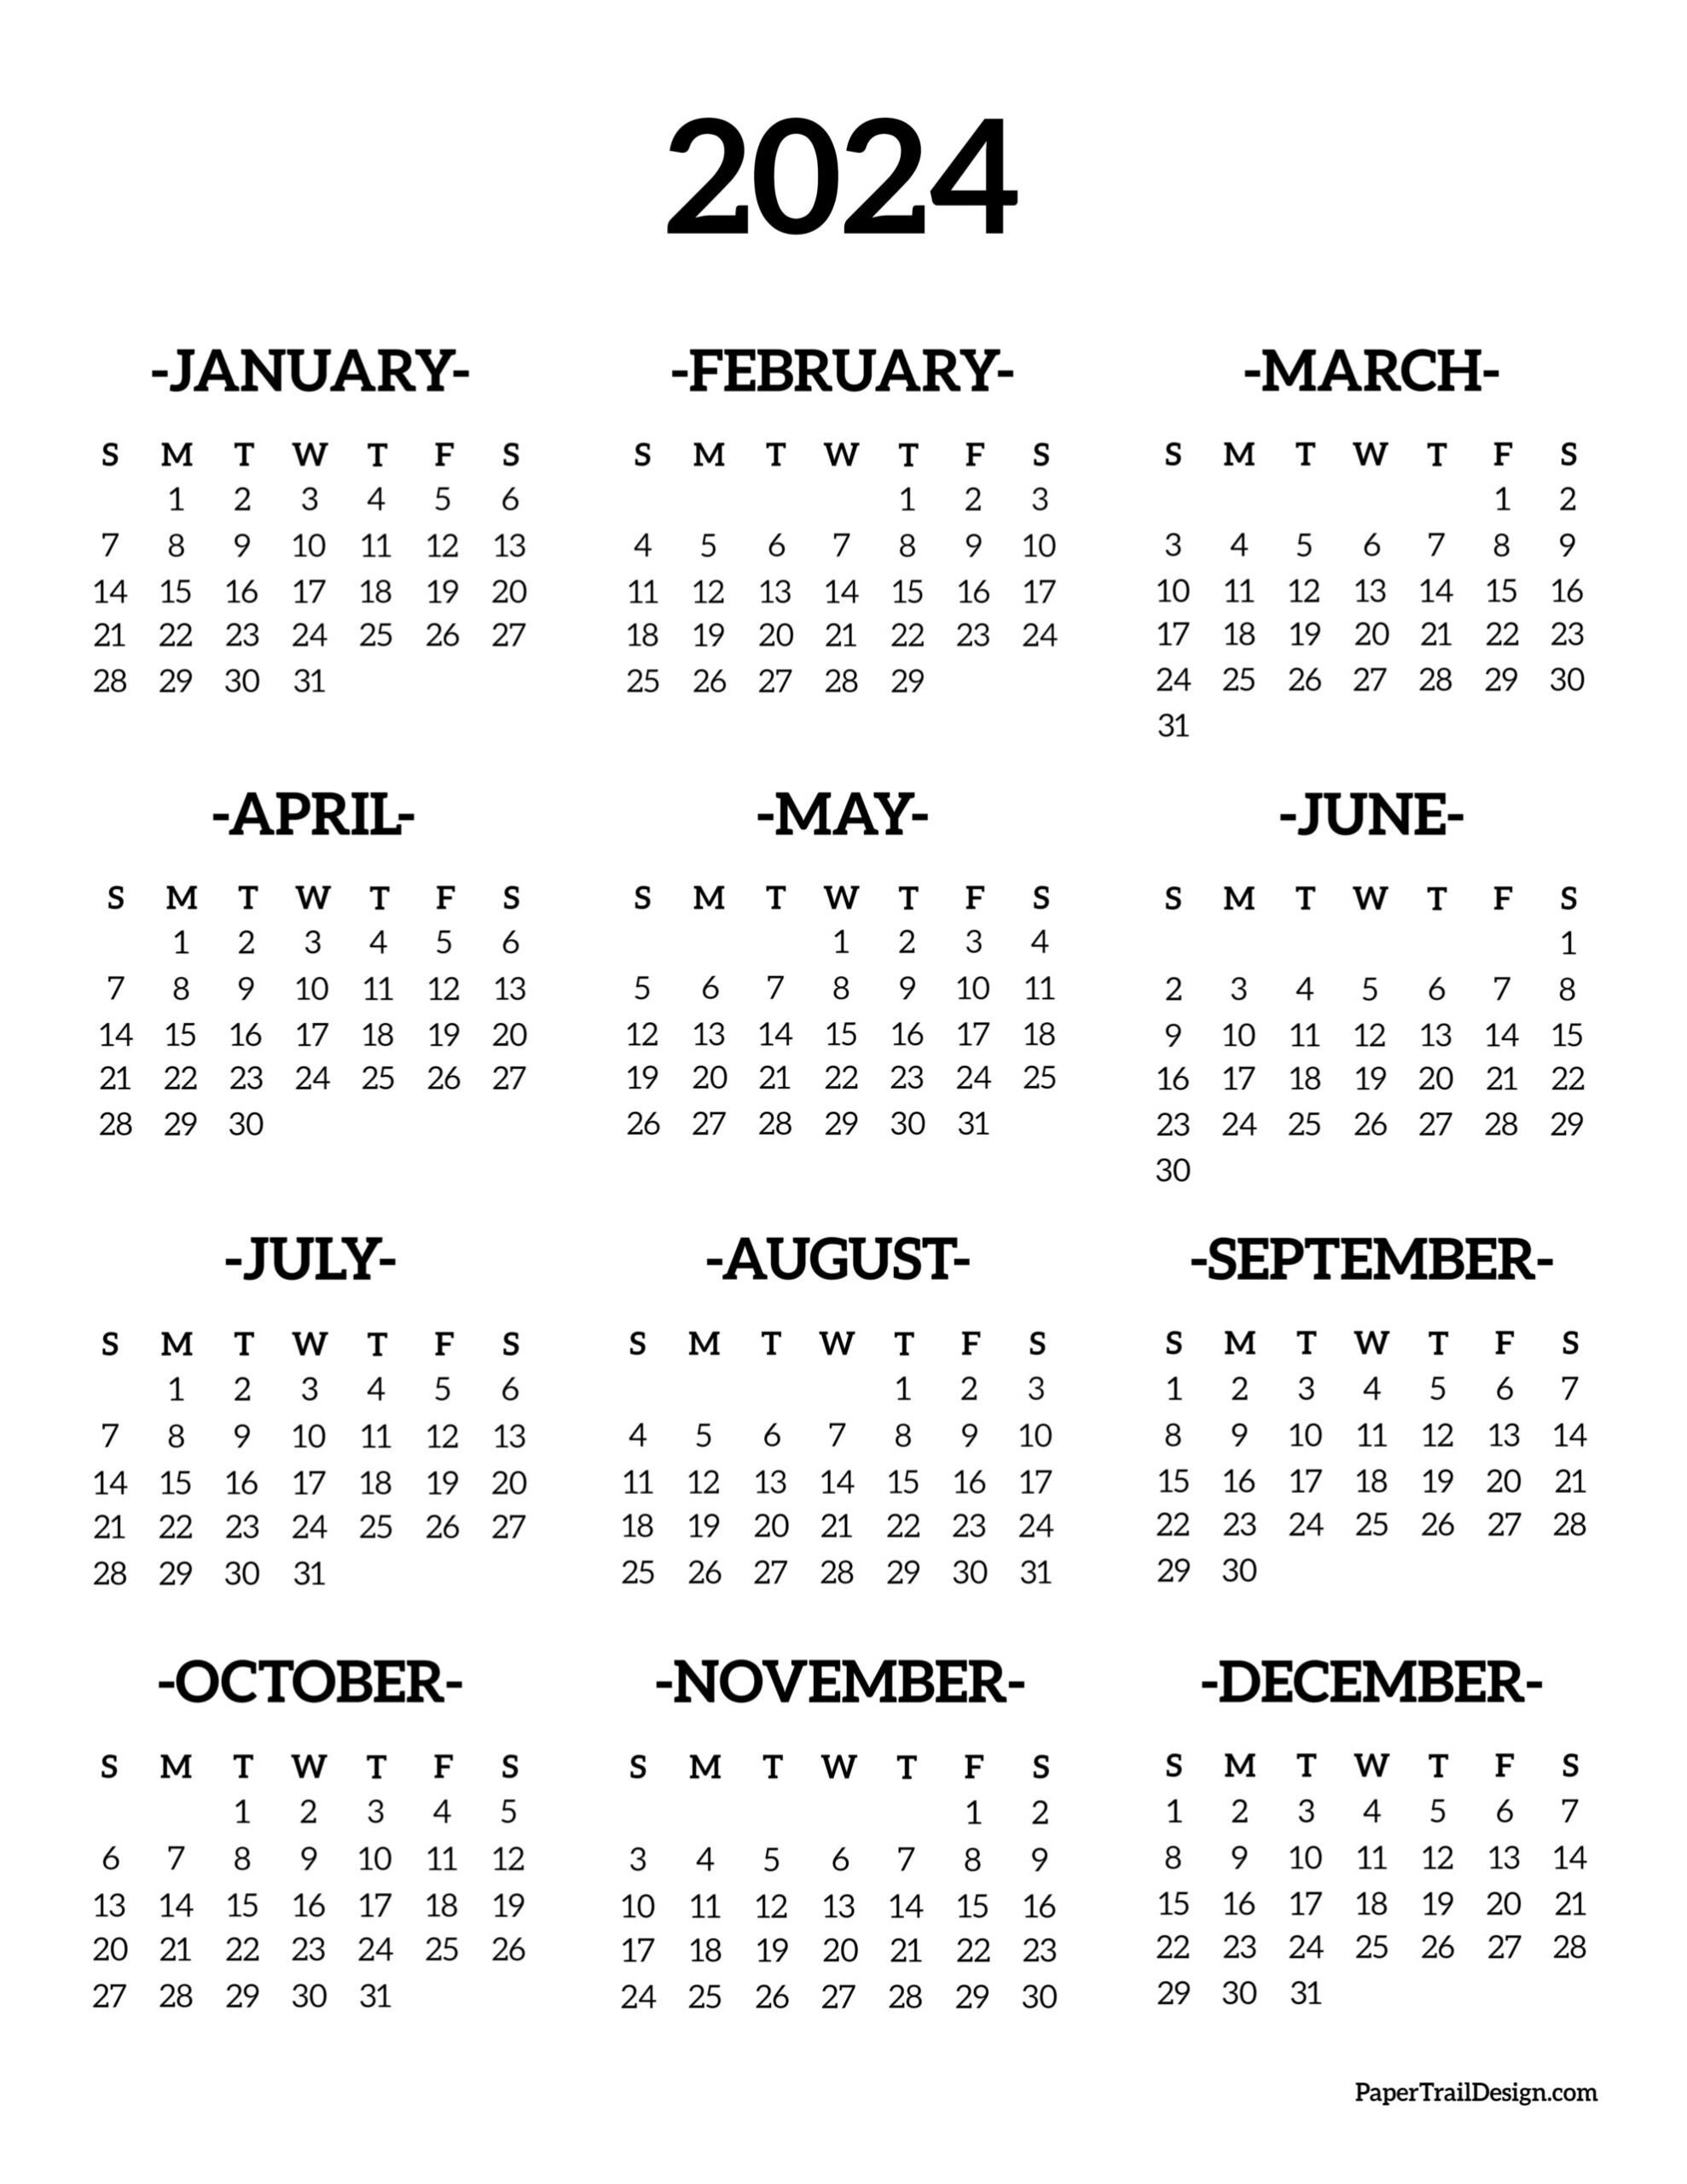 Calendar 2024 Printable One Page - Paper Trail Design | 2024 Year Calendar Printable